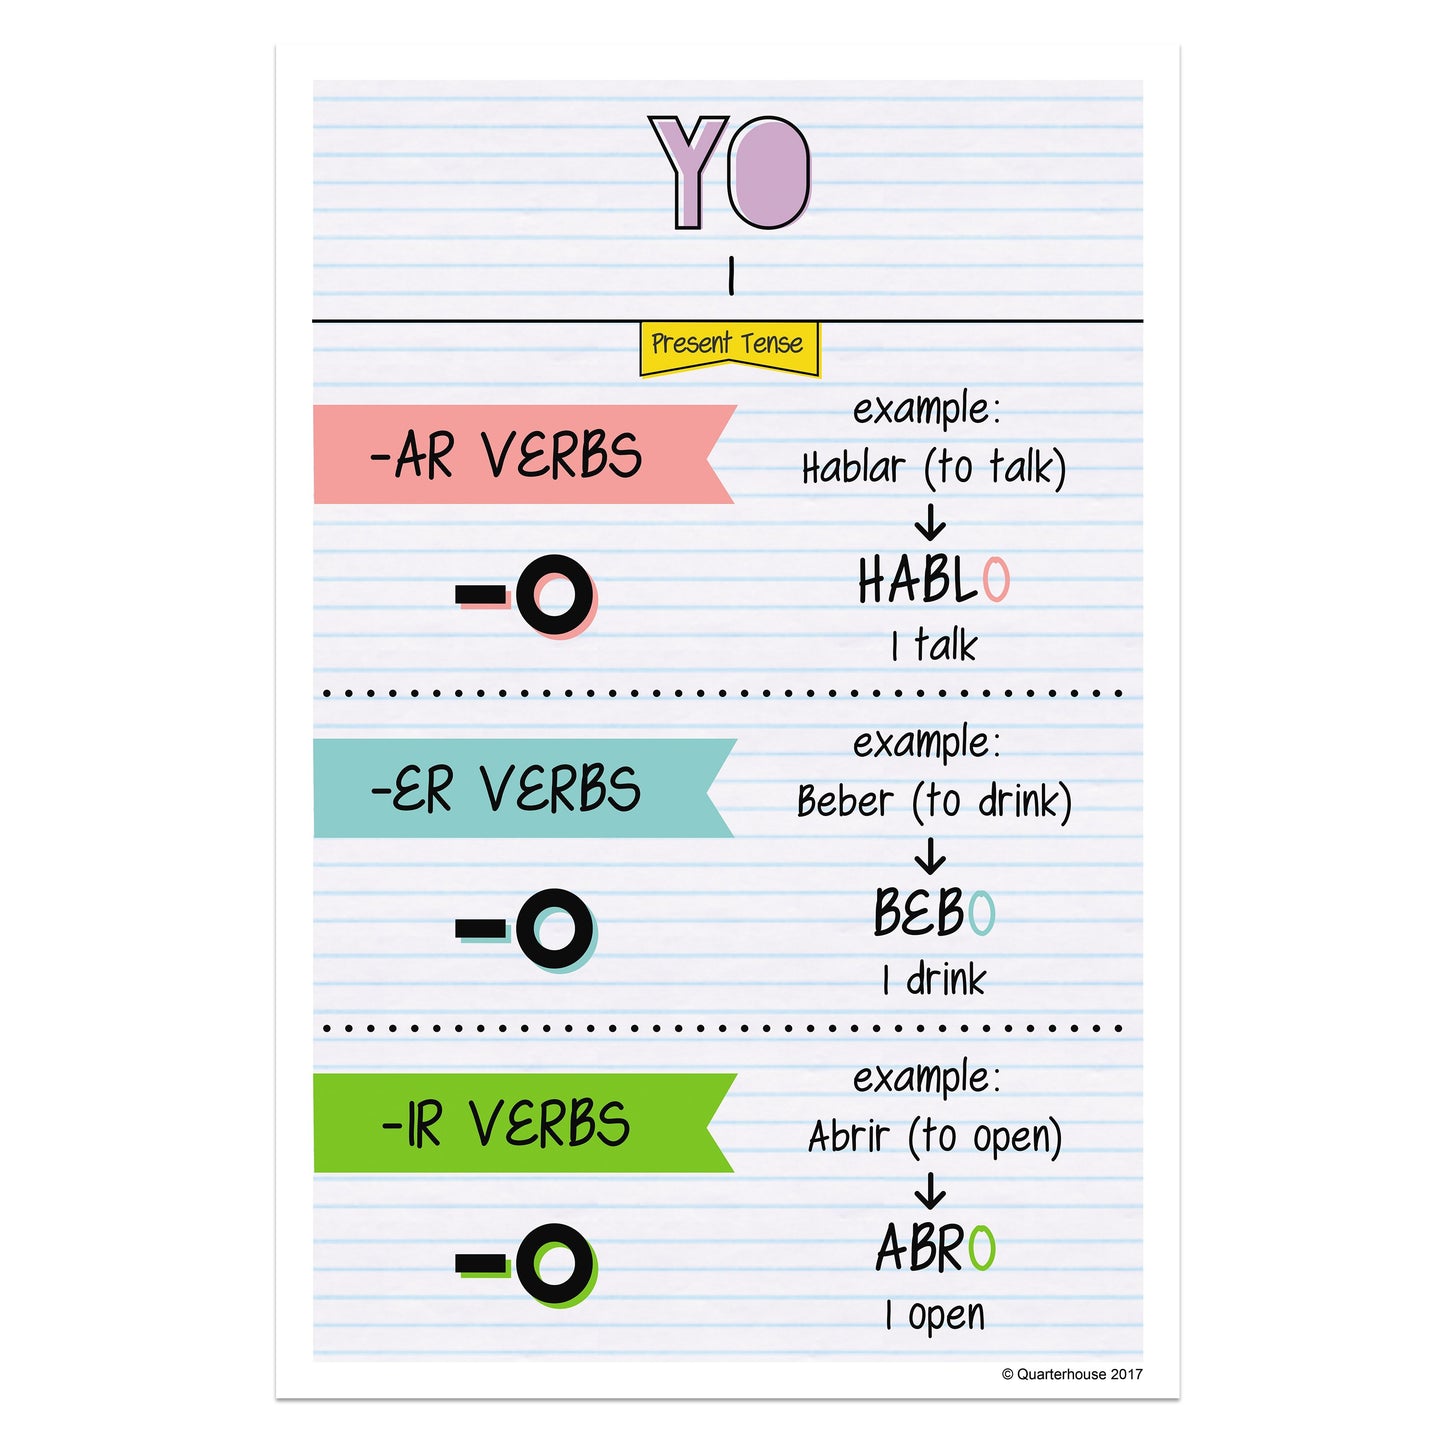 Quarterhouse Yo - Present Tense Spanish Verb Conjugation (Light-Themed) Poster, Spanish and ESL Classroom Materials for Teachers